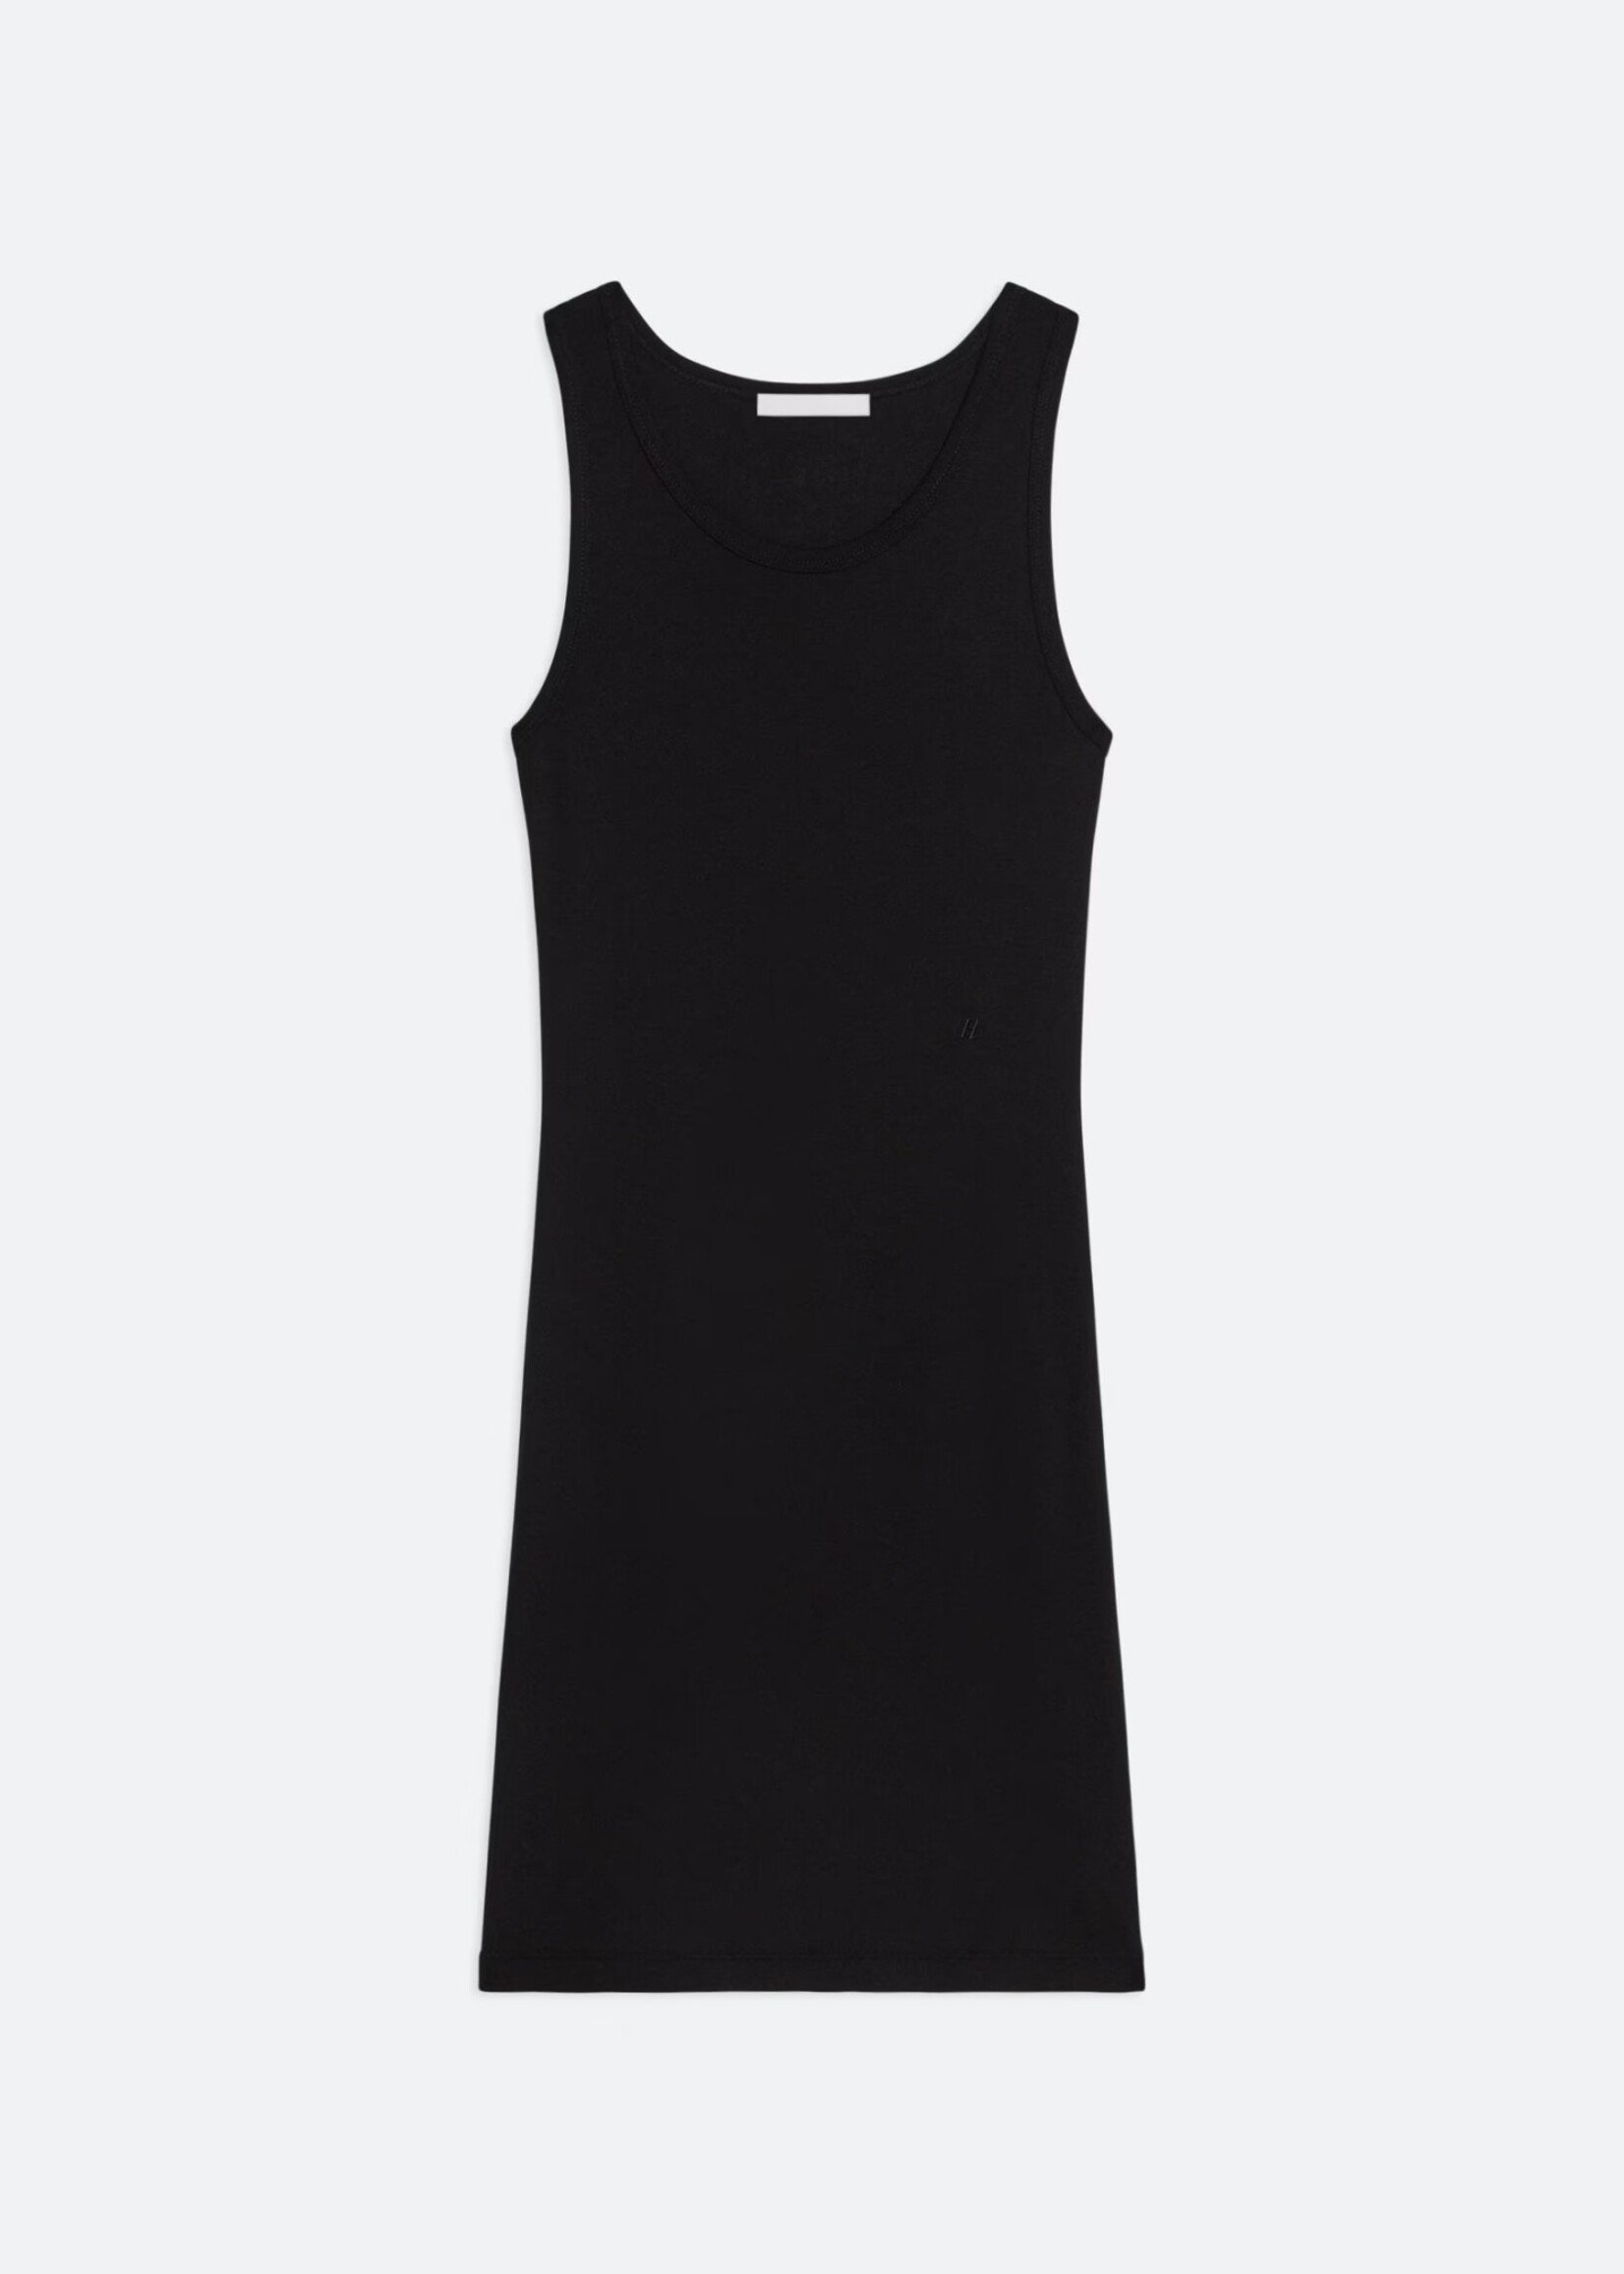 HELMUT LANG BY PETER DO Women's Soft Rib Tank Dress in Black